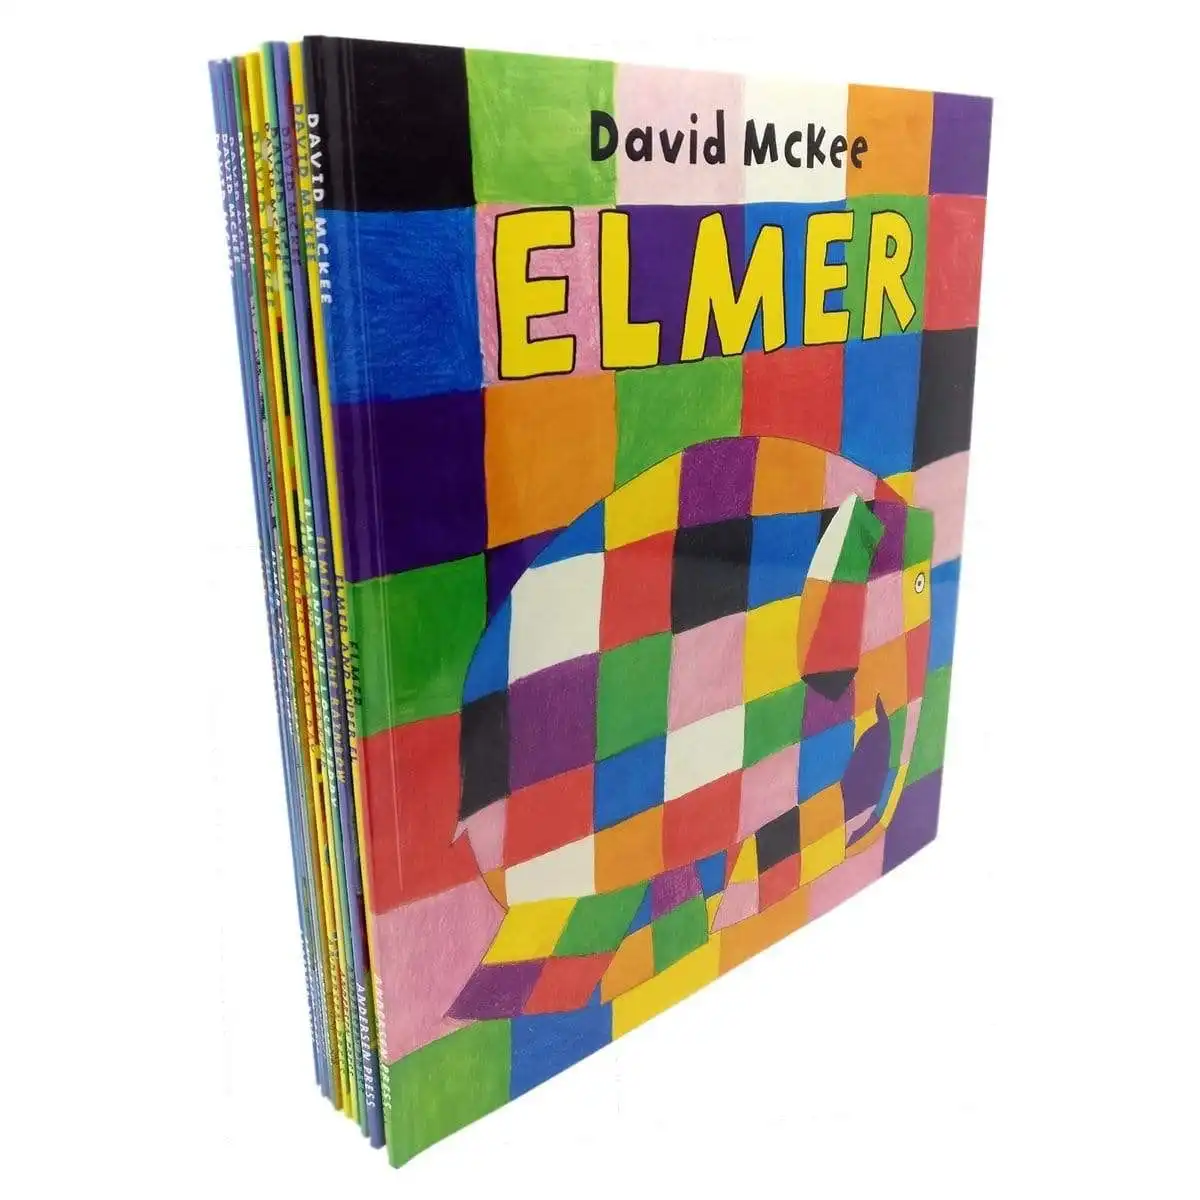 Elmer - 10 Copy Box Set